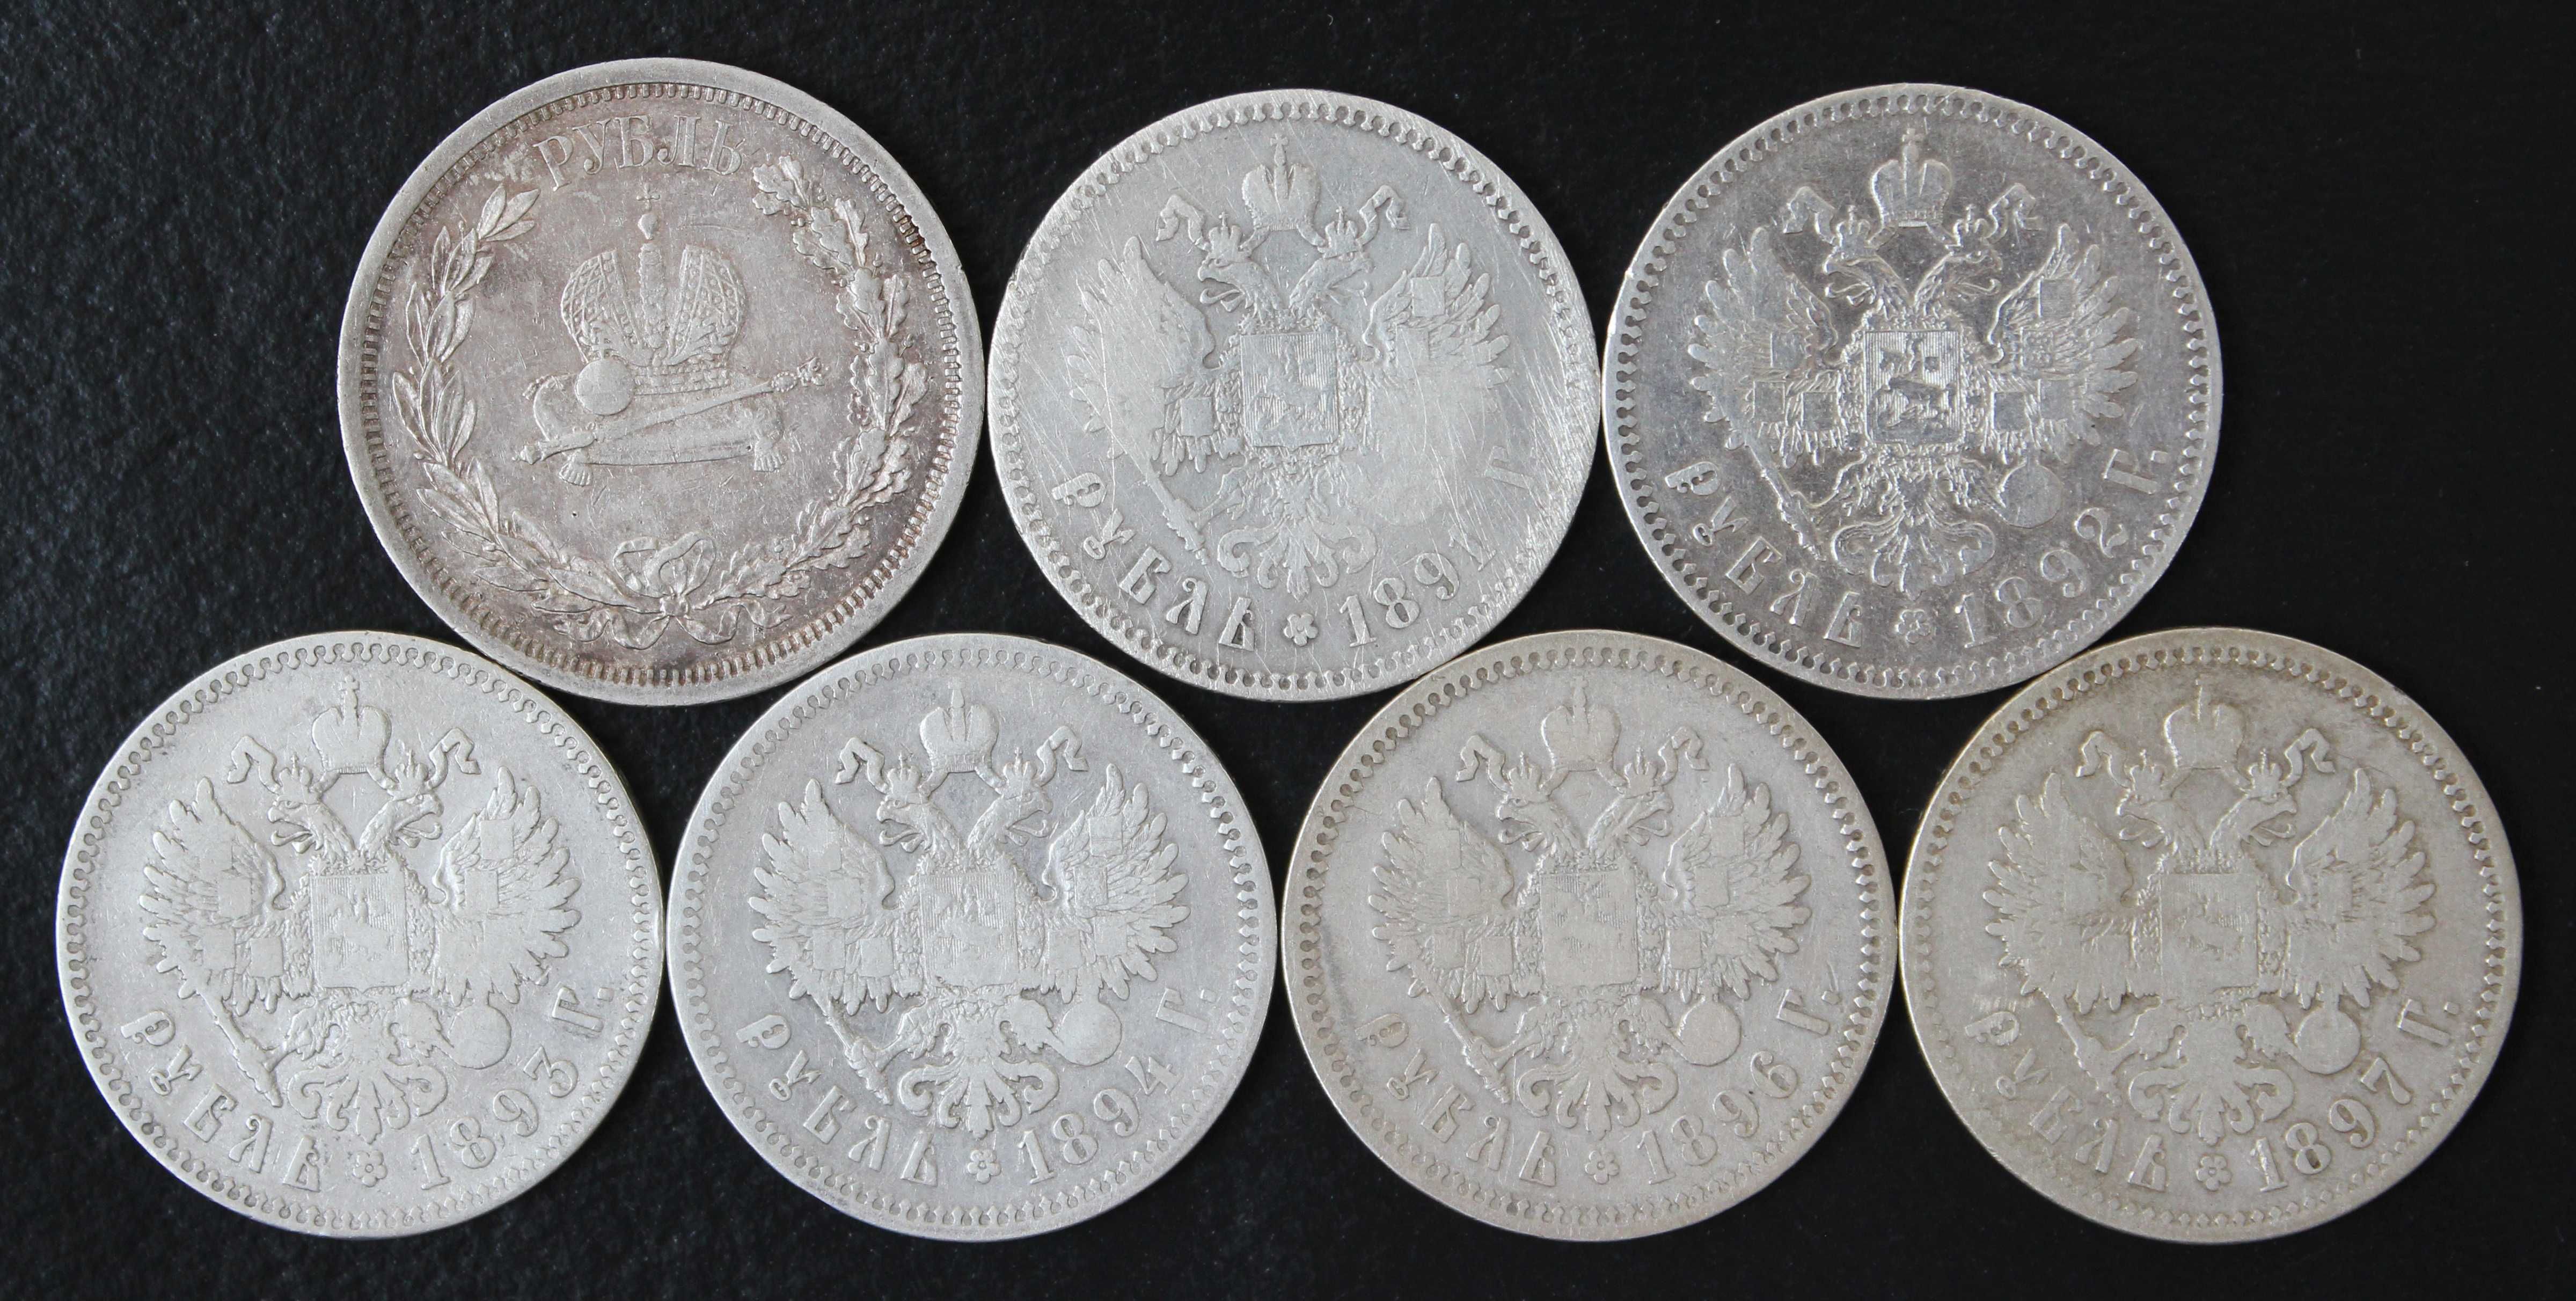 царский рубль 1896,1897,1898,1899 года,оригинал,серебро